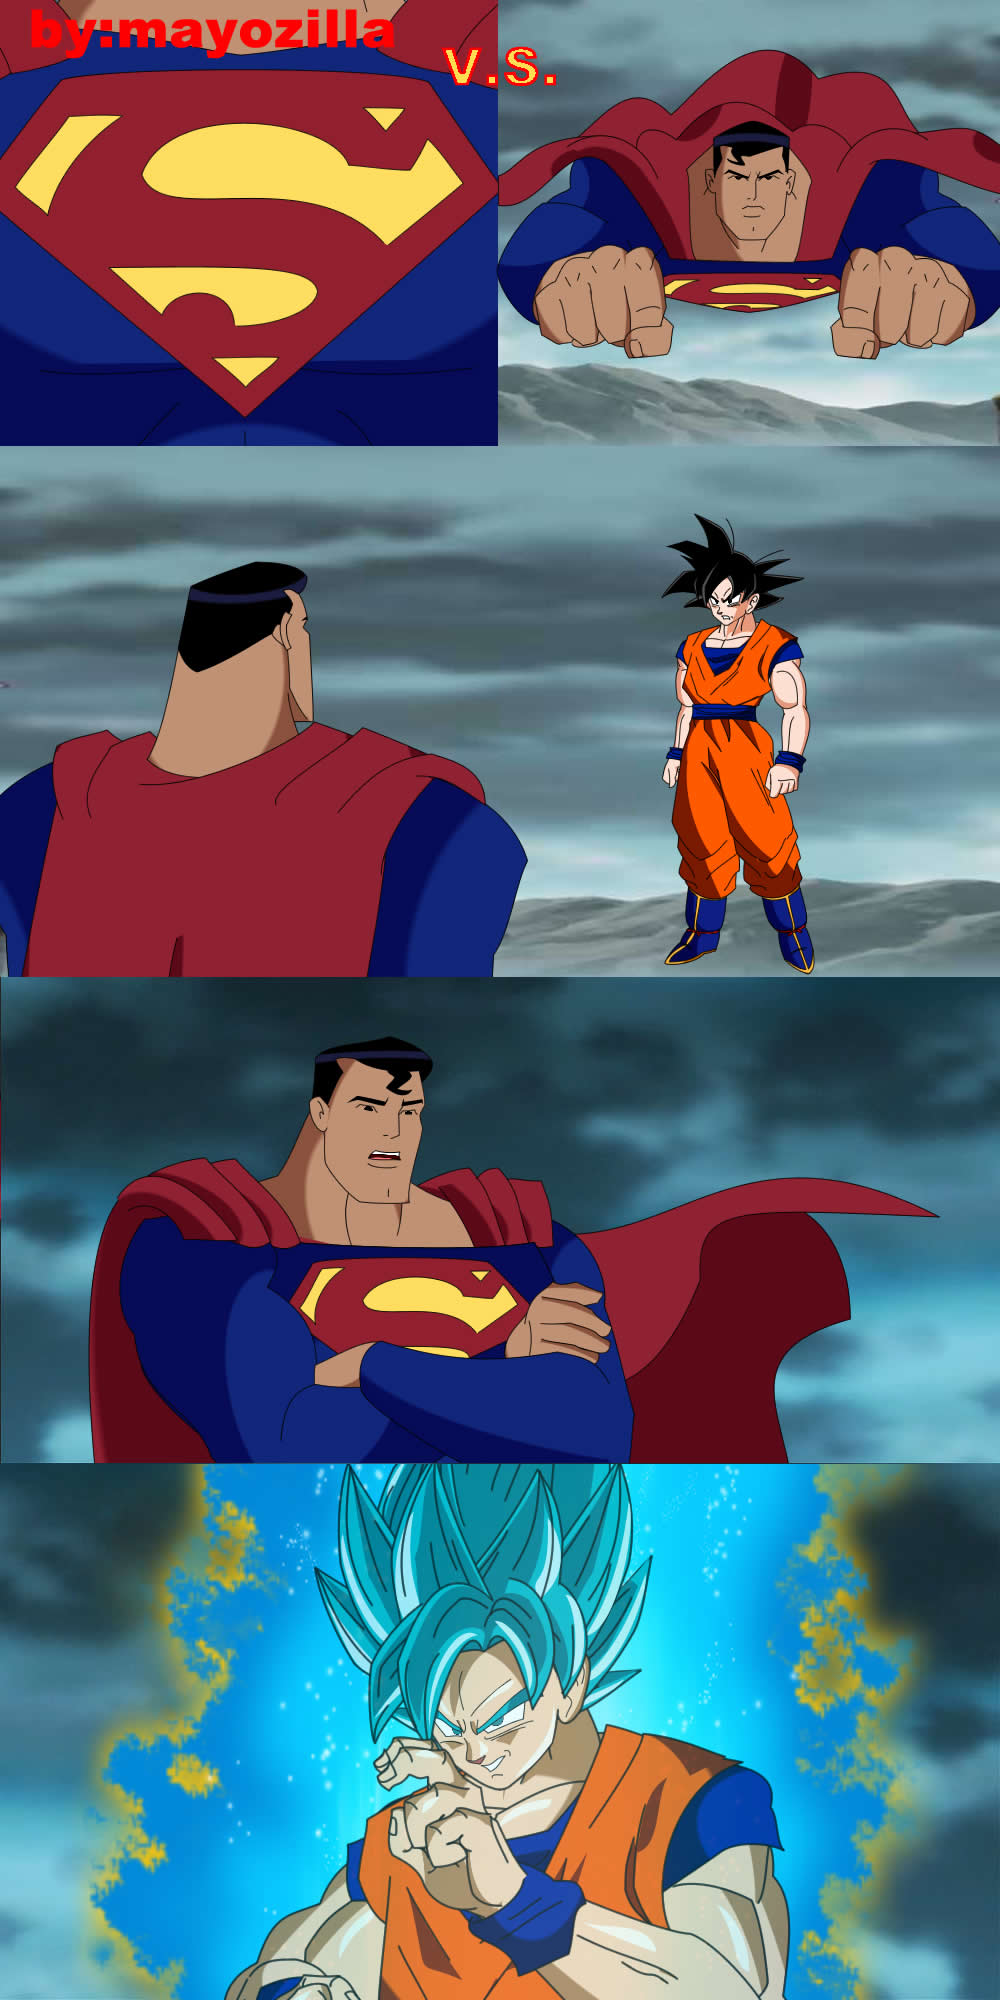 Superman vs Goku by mayozilla on DeviantArt